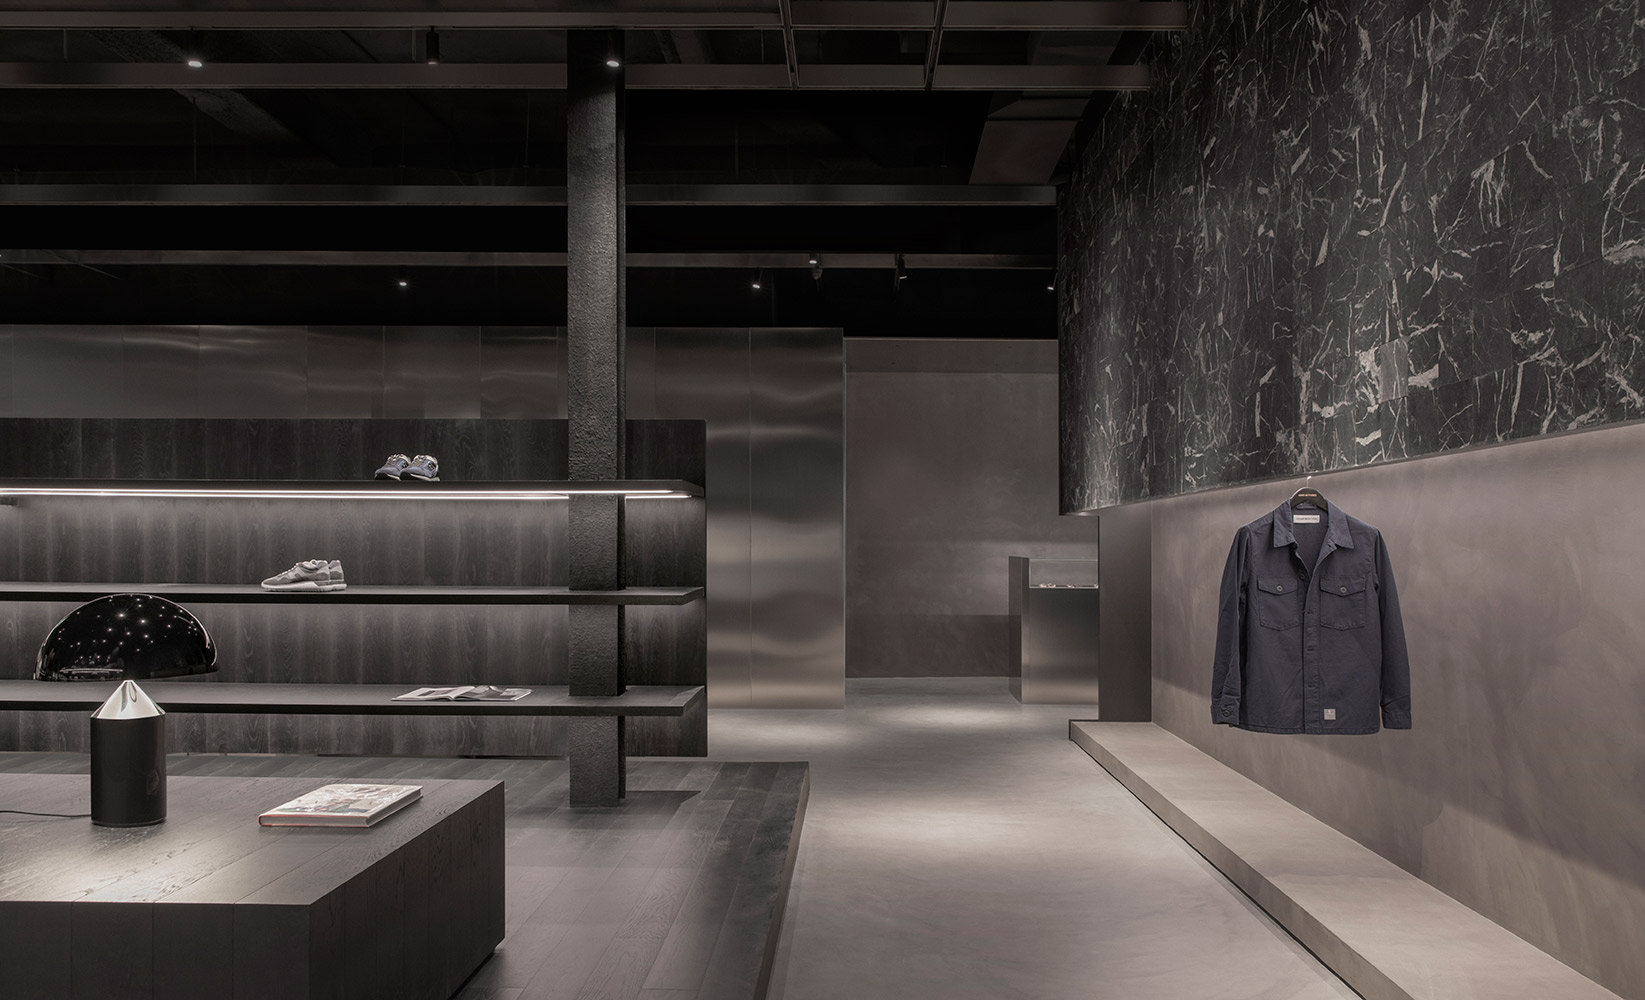 The Nino Alvarez store carries a minimalist concept